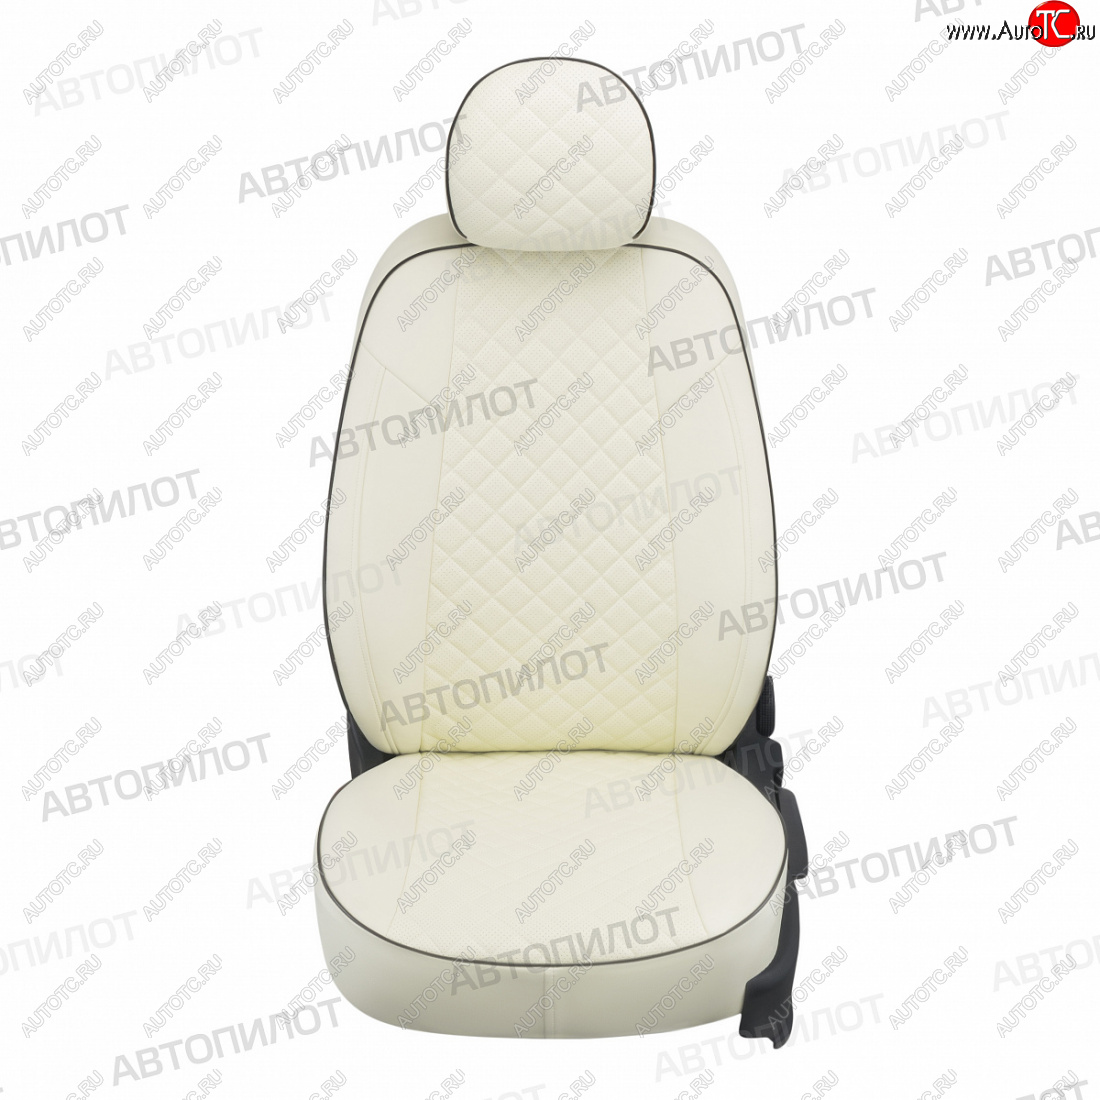 14 499 р. Чехлы сидений (экокожа) Автопилот Ромб  KIA Cerato  1 LD (2003-2008) (белый)